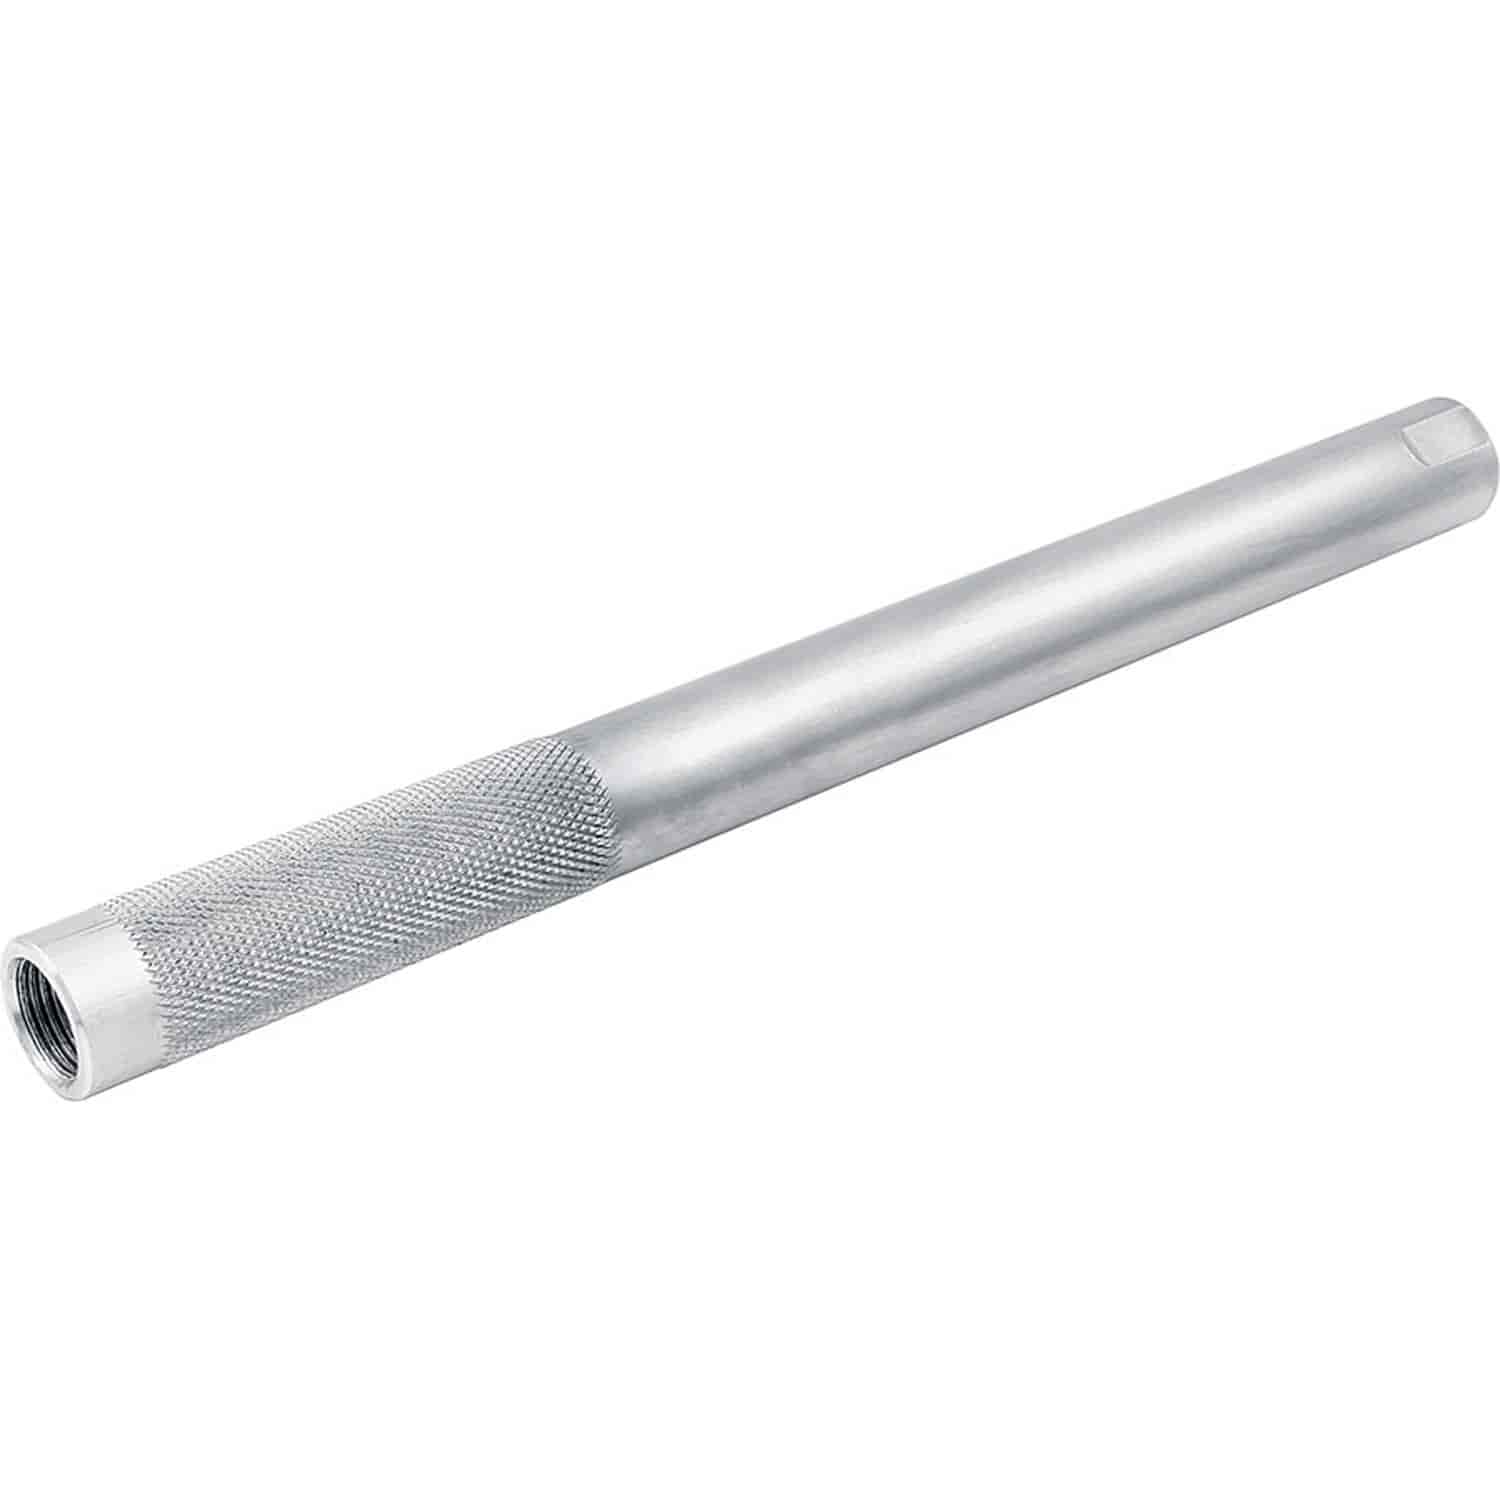 Swedged Aluminum Tie Rod Tube Length: 7